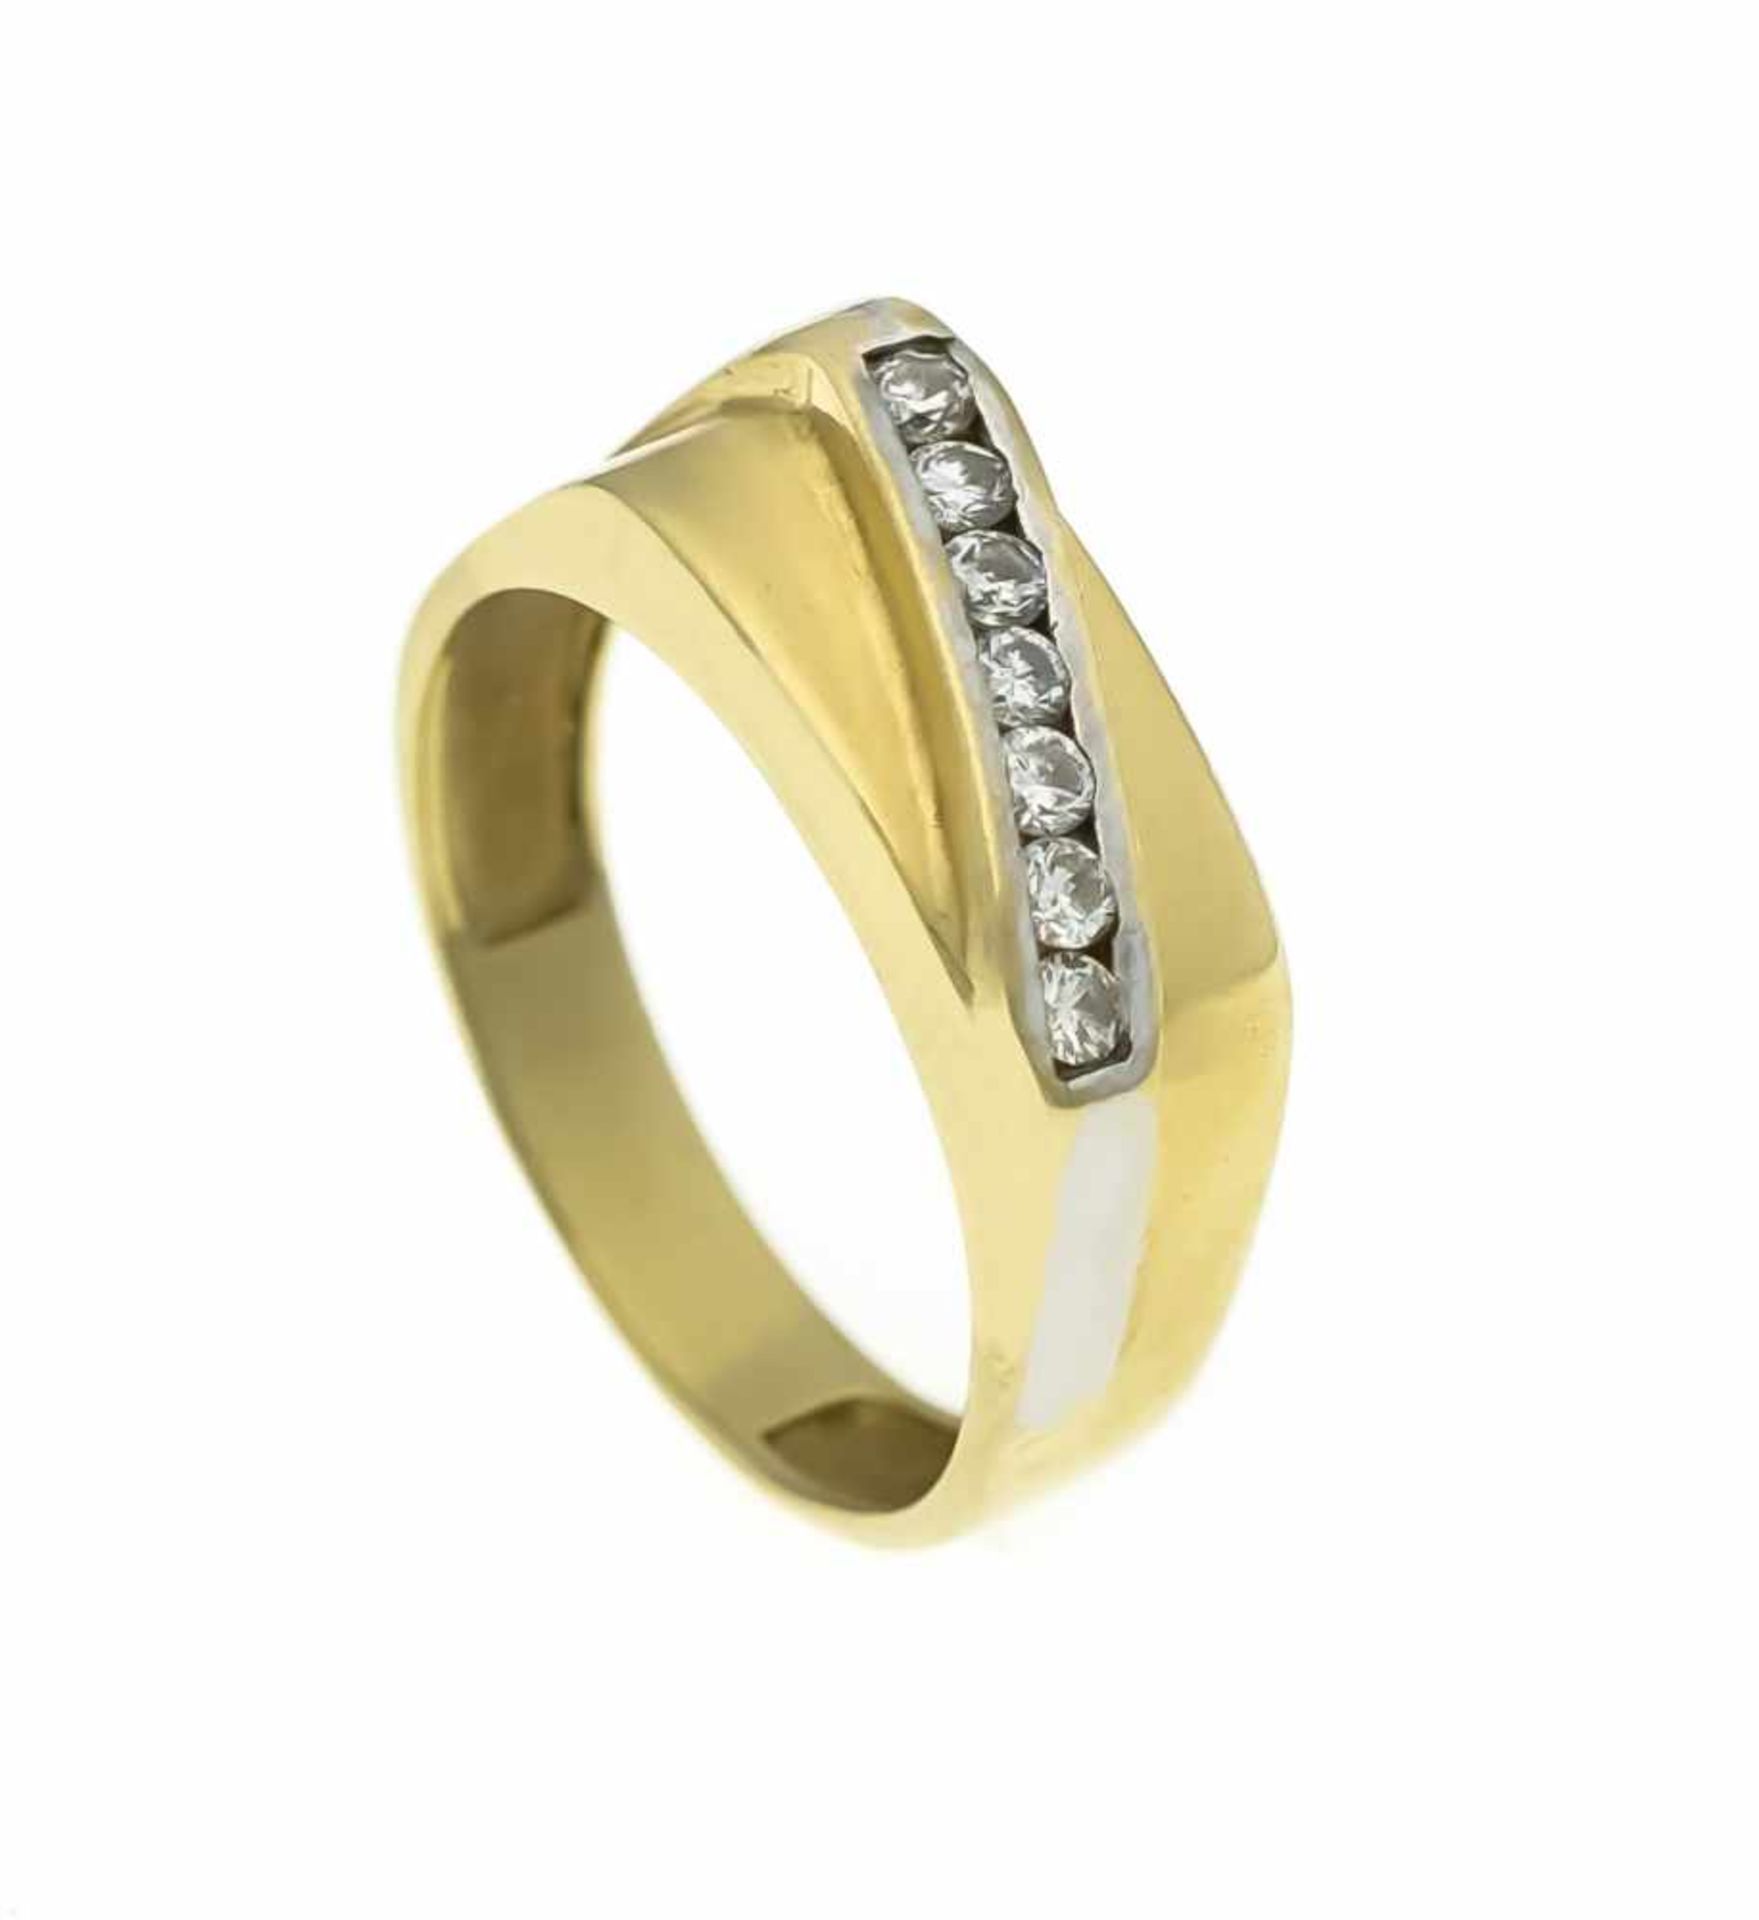 Brillant ring Christ GG / WG 585/000 with one brilliant cut diamond, 0.10 ct W / SI, RG